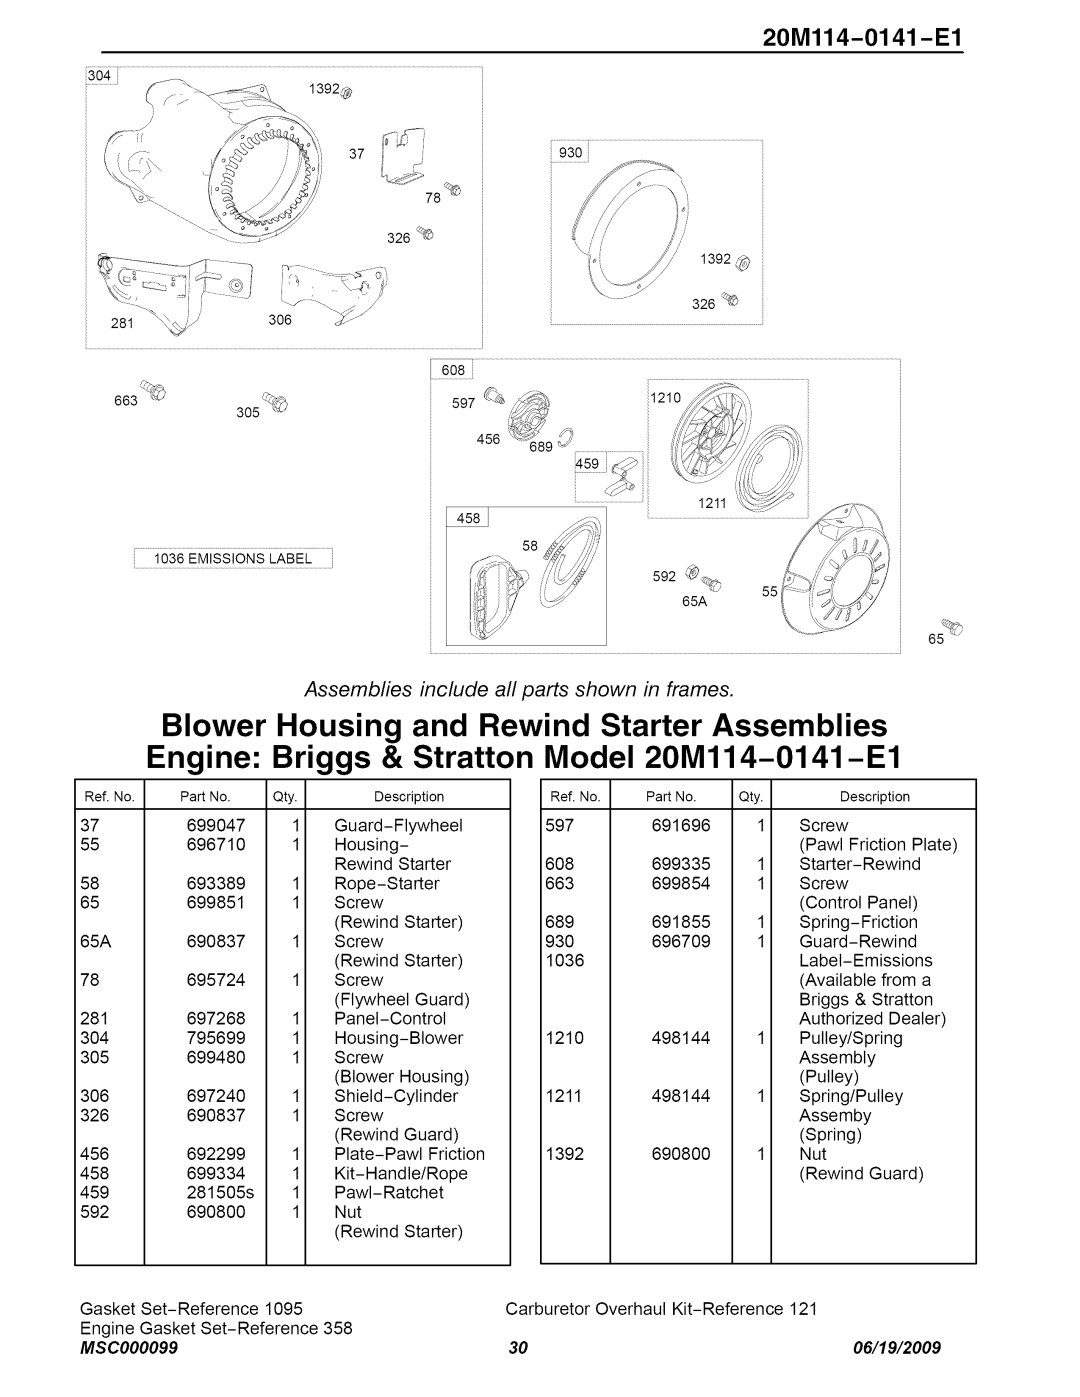 Craftsman C950-52943-0 owner manual 20Ml14-0141 -El, Assemblies include all parts shown tn frames, MSC000099, 06/19/2009 